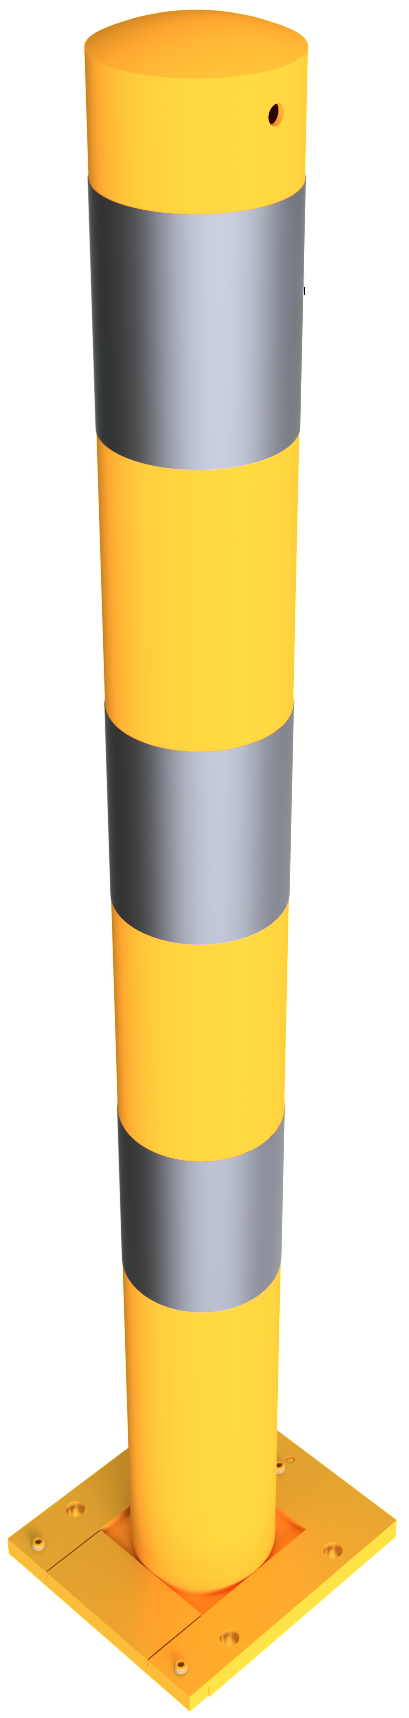 Modellbeispiel: Absperrpfosten -Bollard- Ø 89 mm (Art. 489apbg)